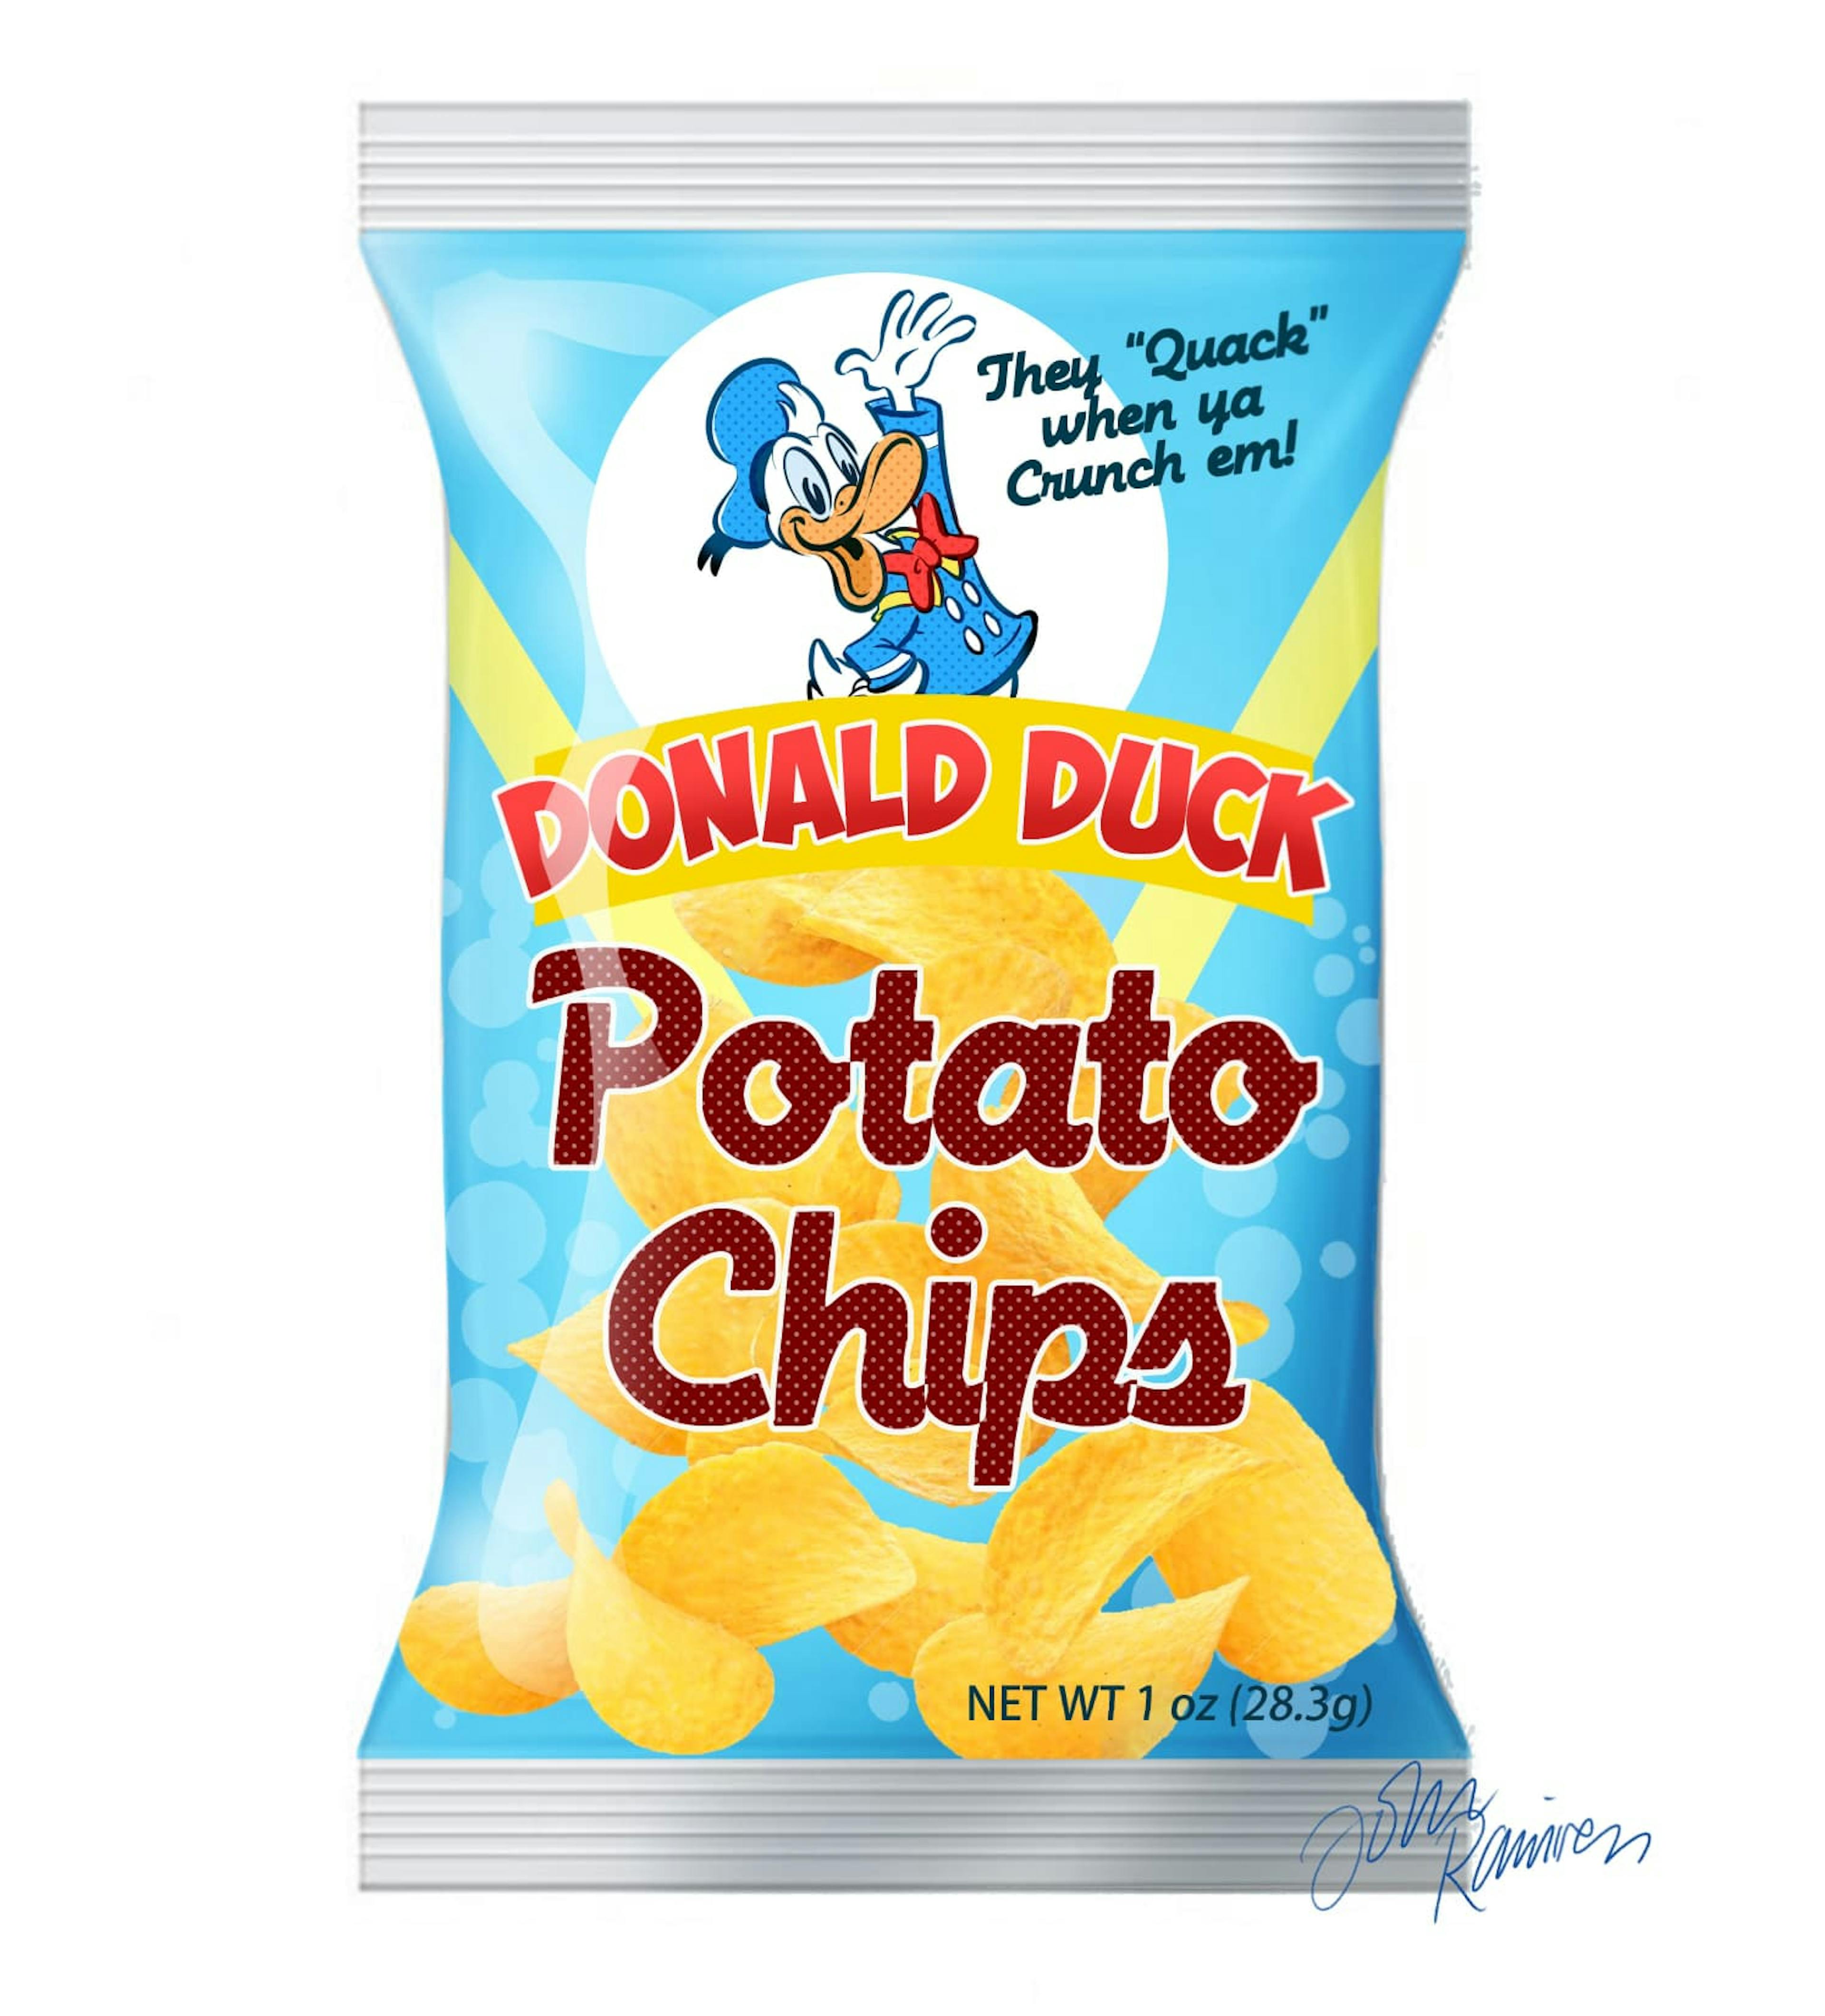 A bag of Donald Duck potato chips